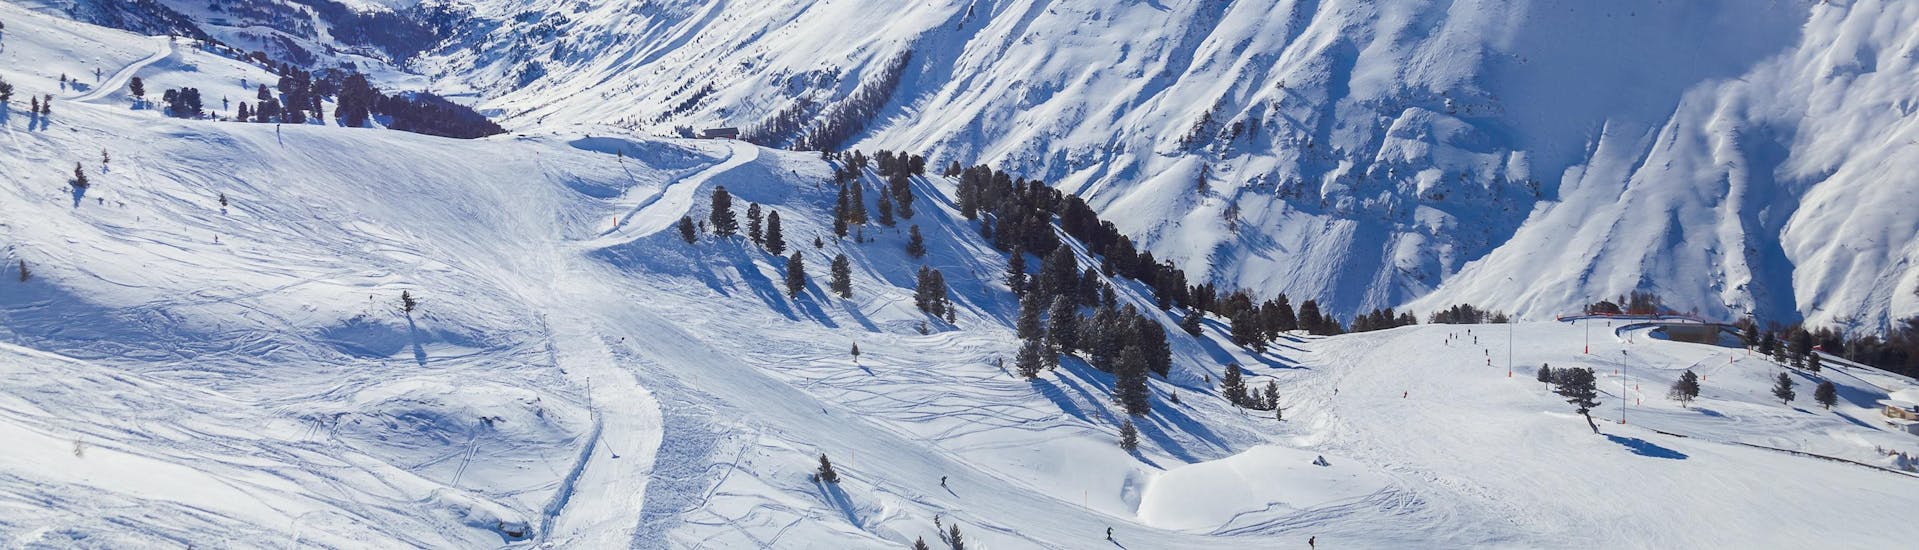 View of the alpine landscape of the ski resort Hochgurgl where local ski schools offer their ski lessons.